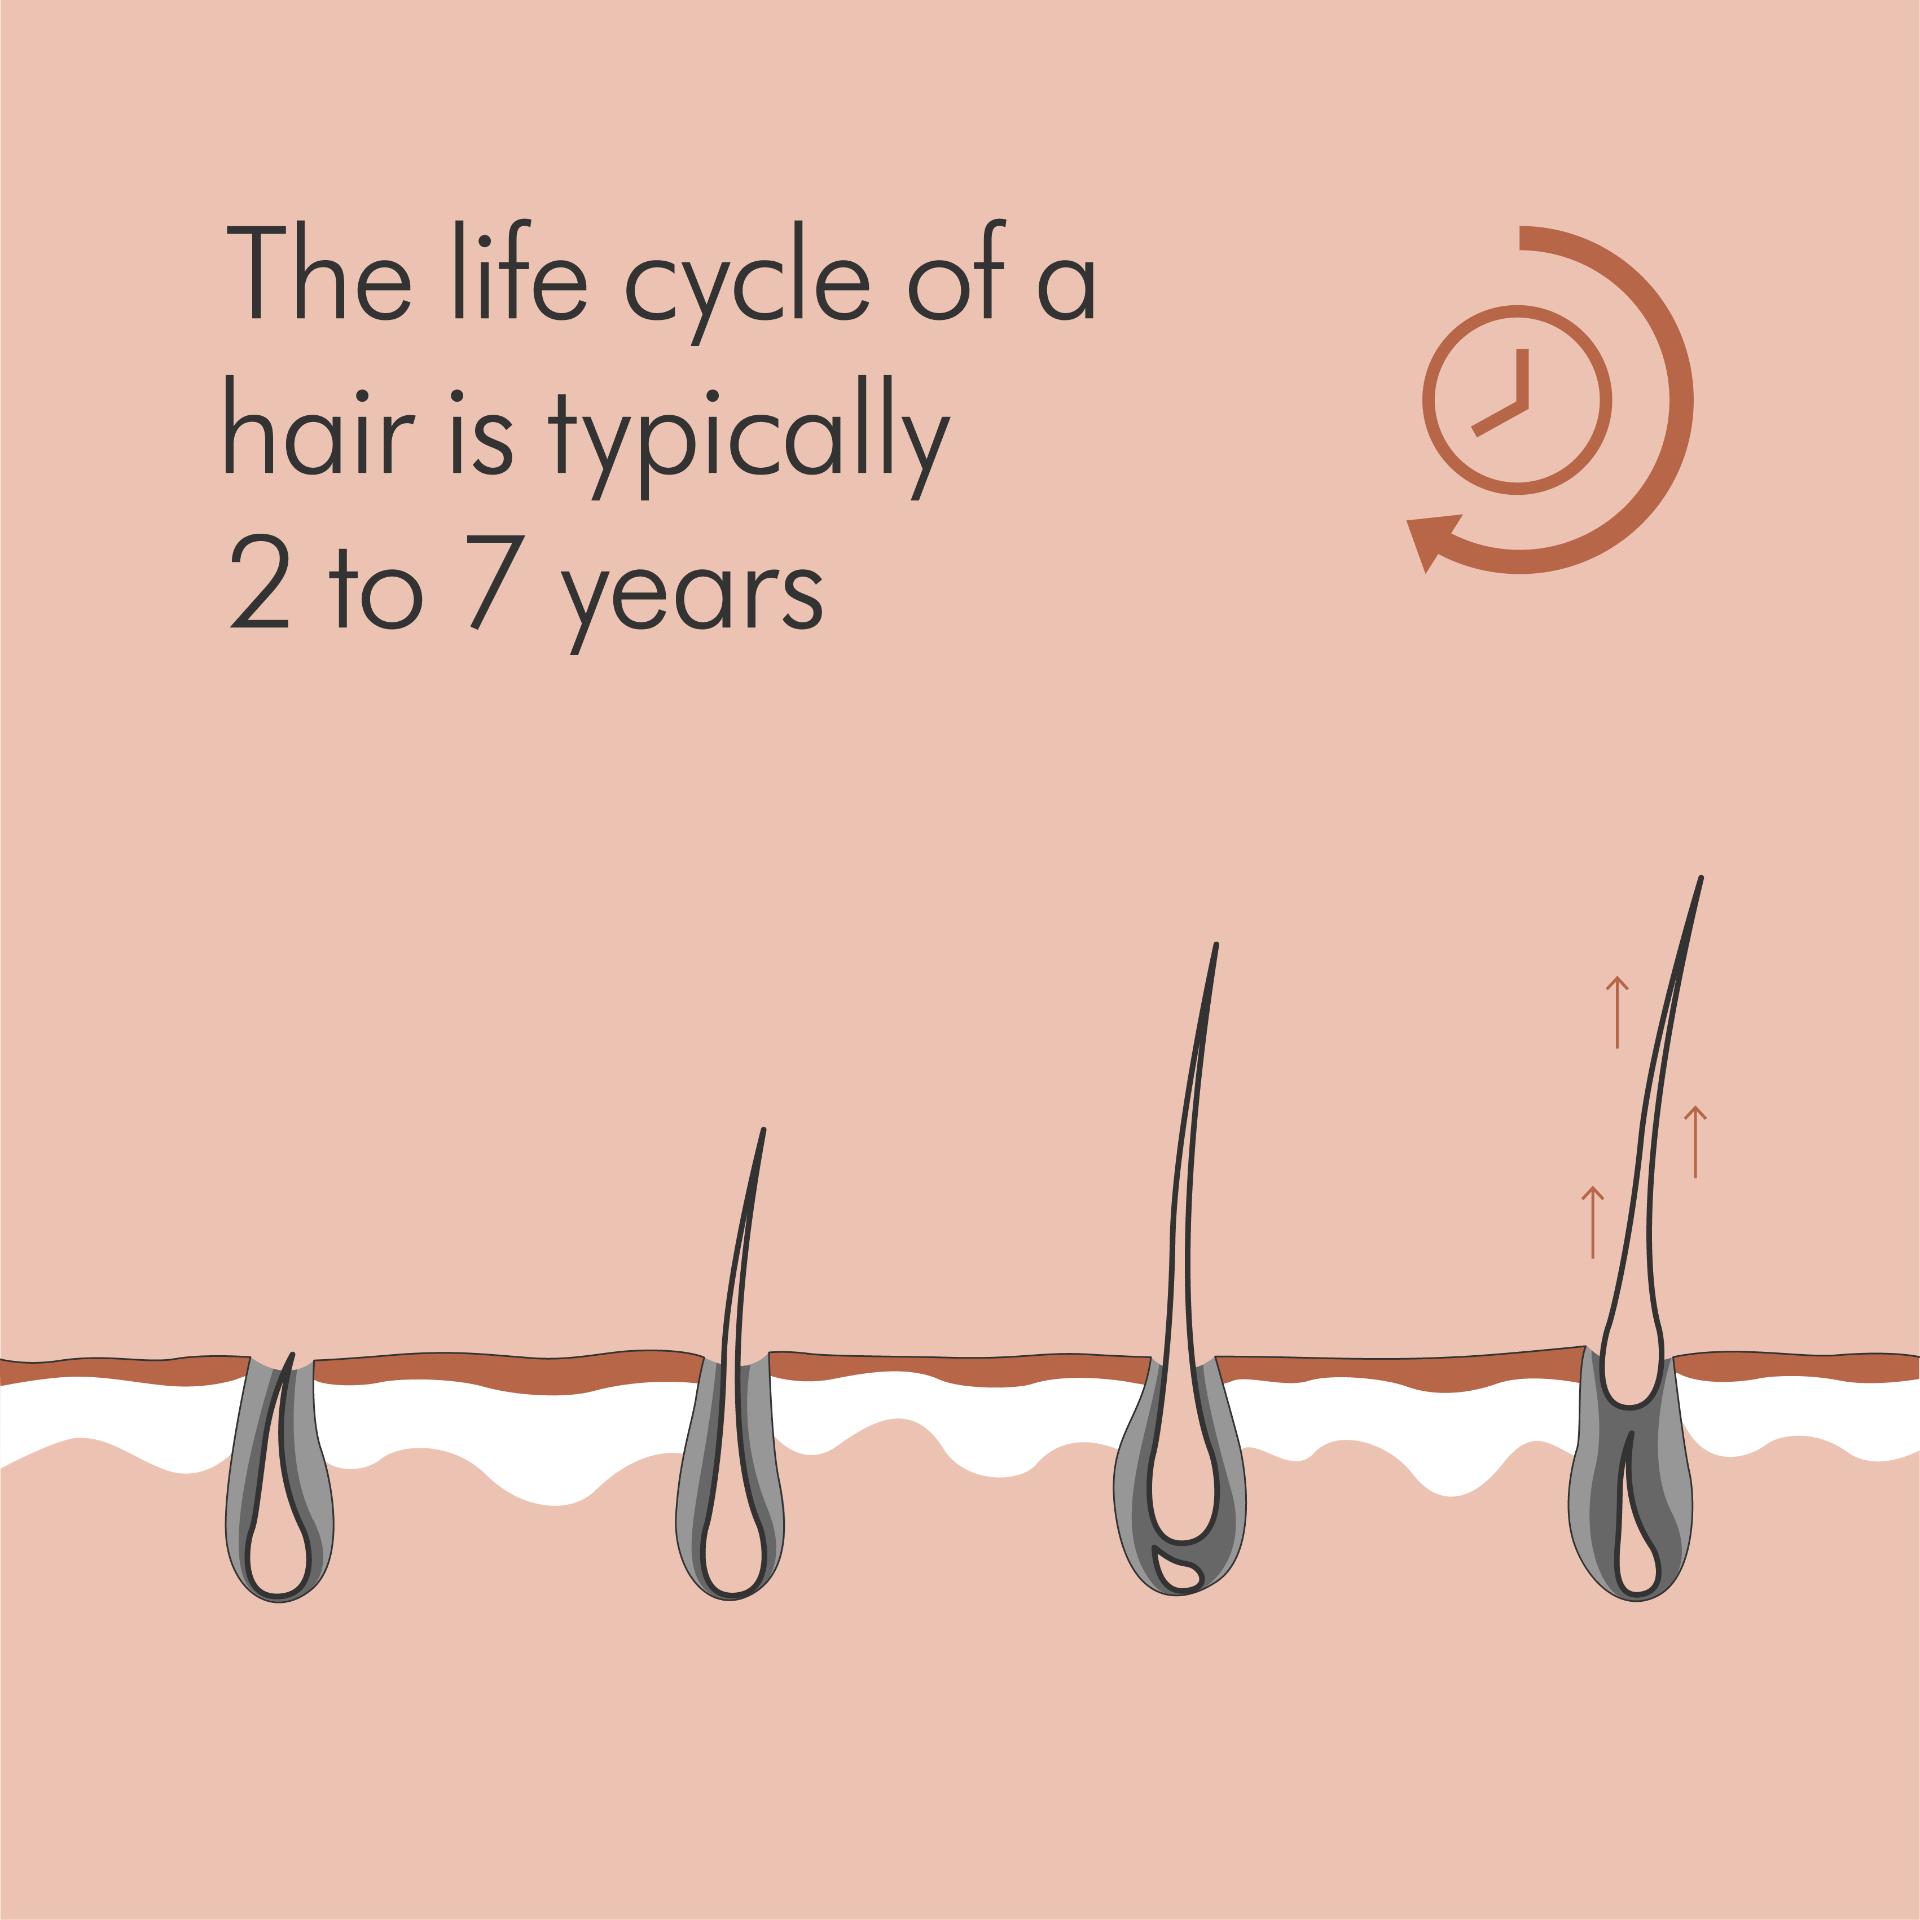 Life cycle of hair